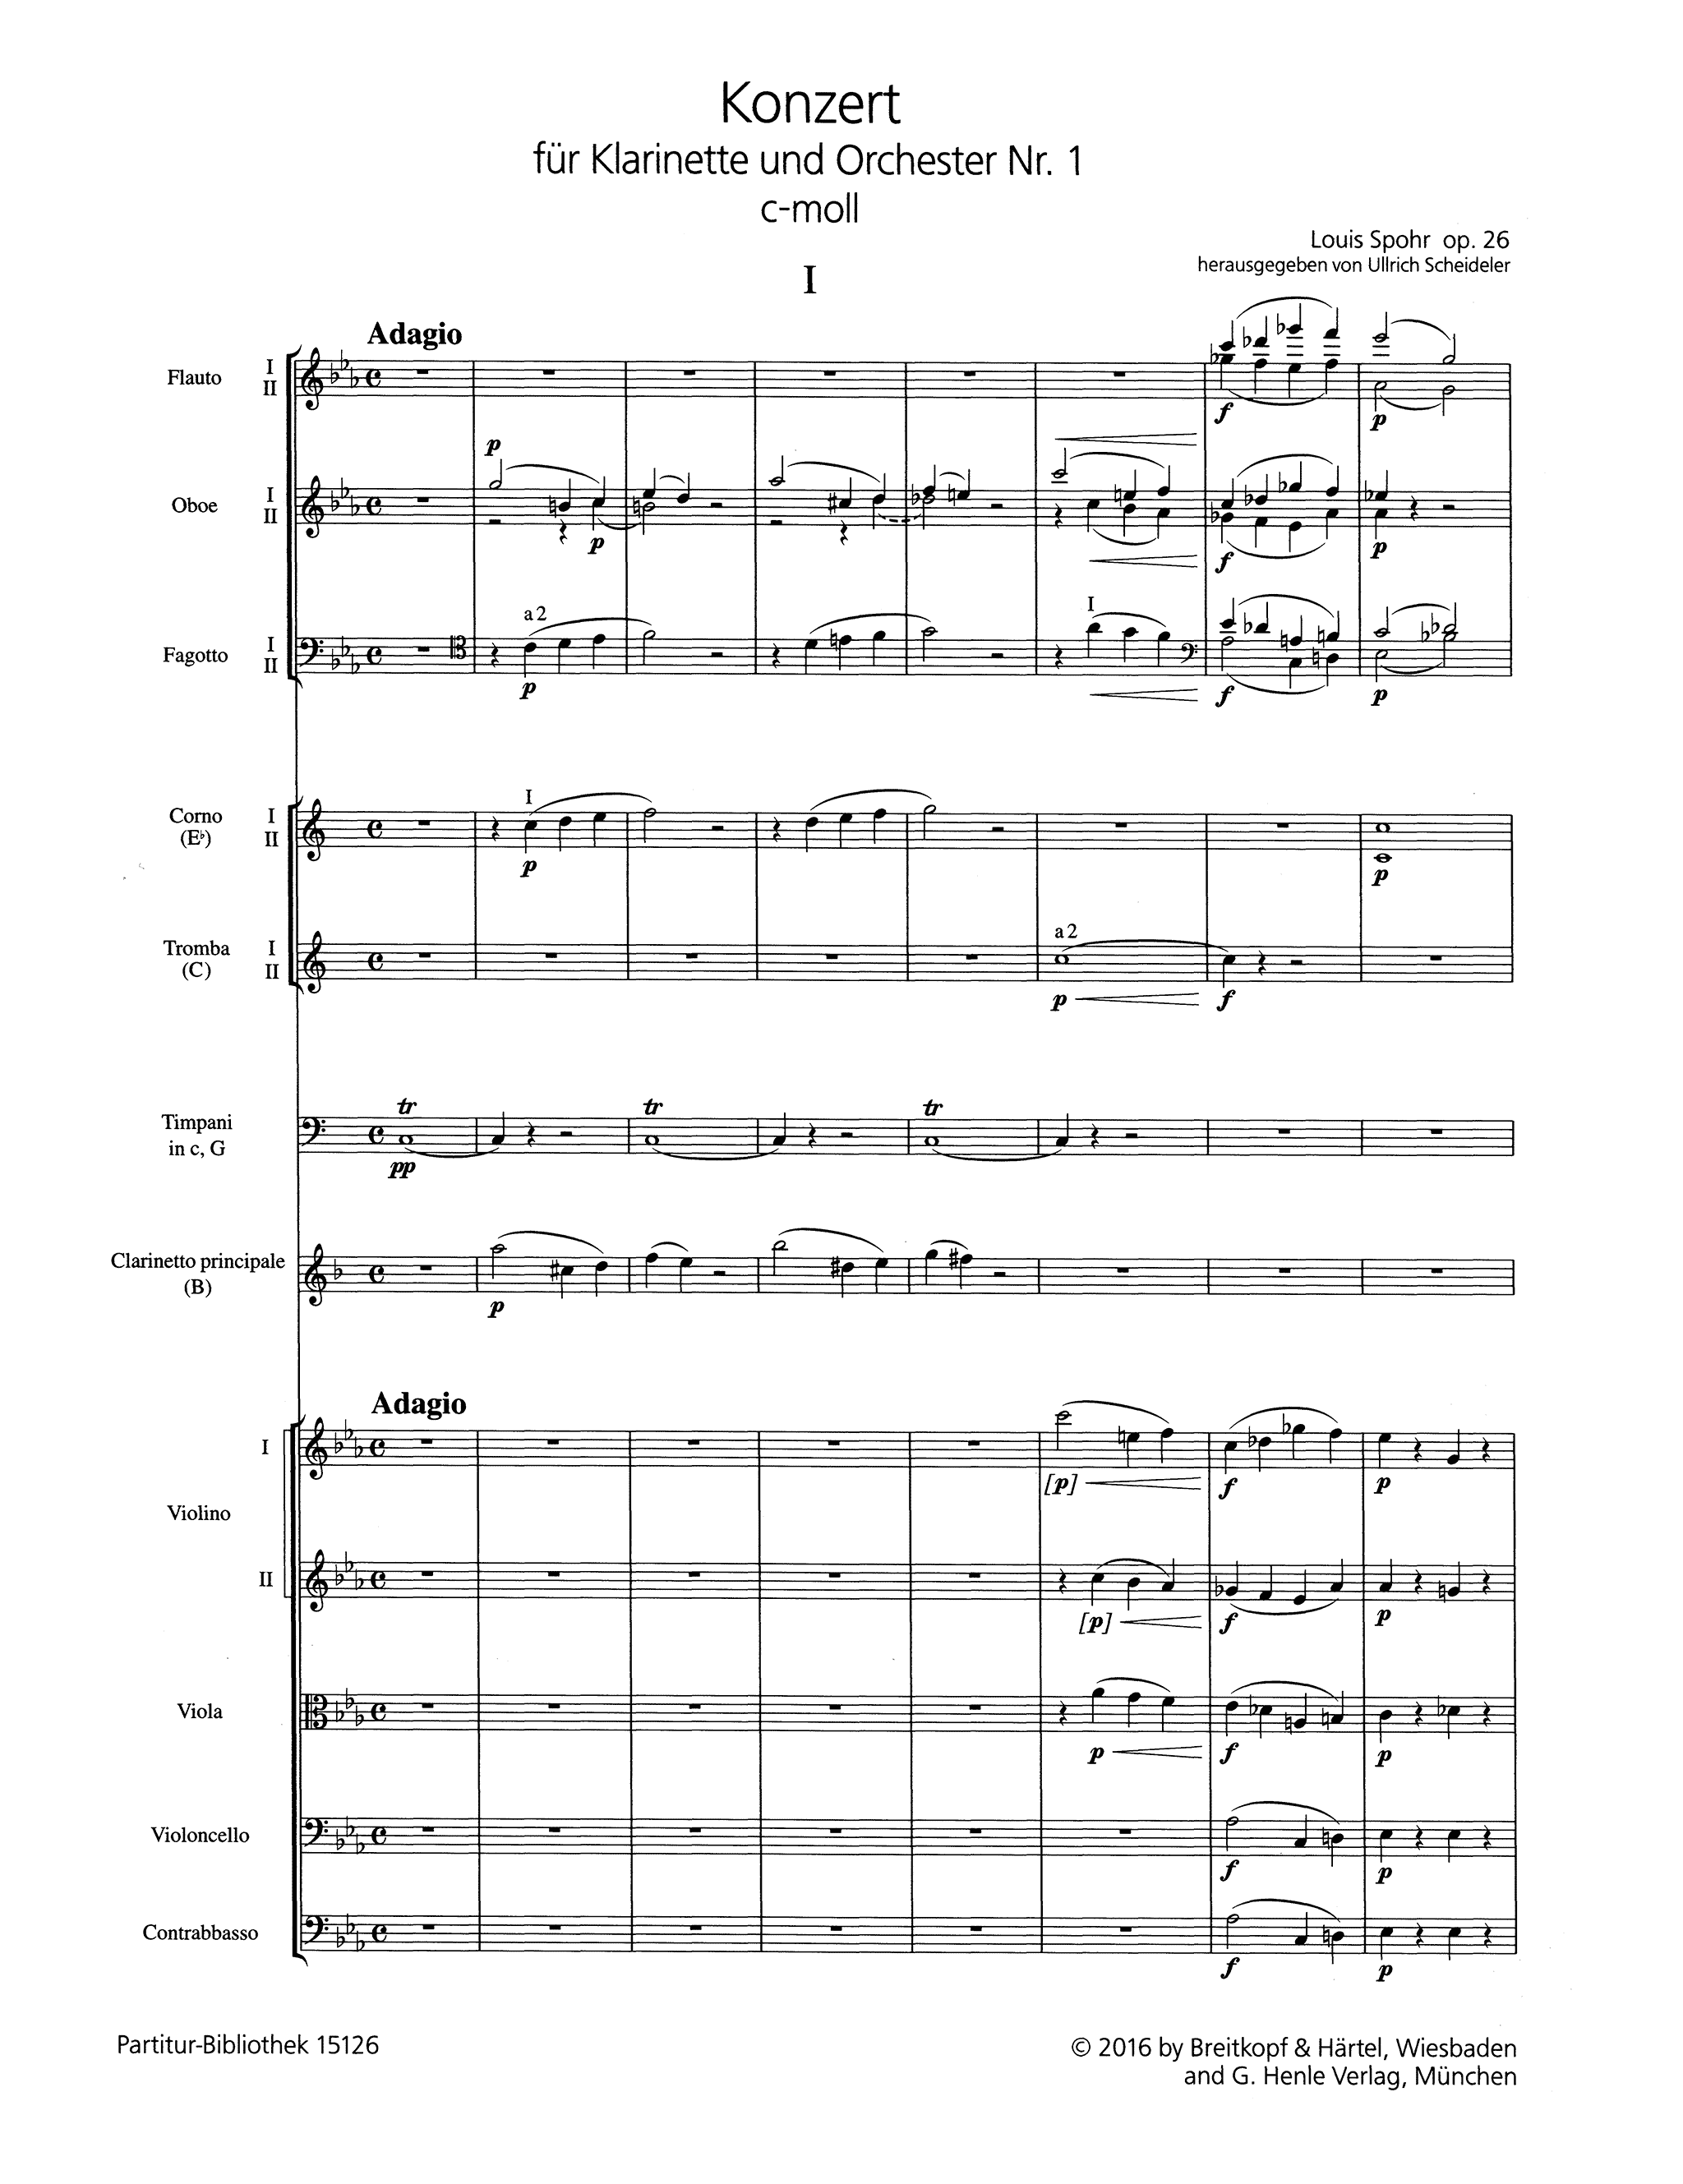 Spohr Clarinet Concerto No. 1 in C Minor, Op. 26 - Movement 1